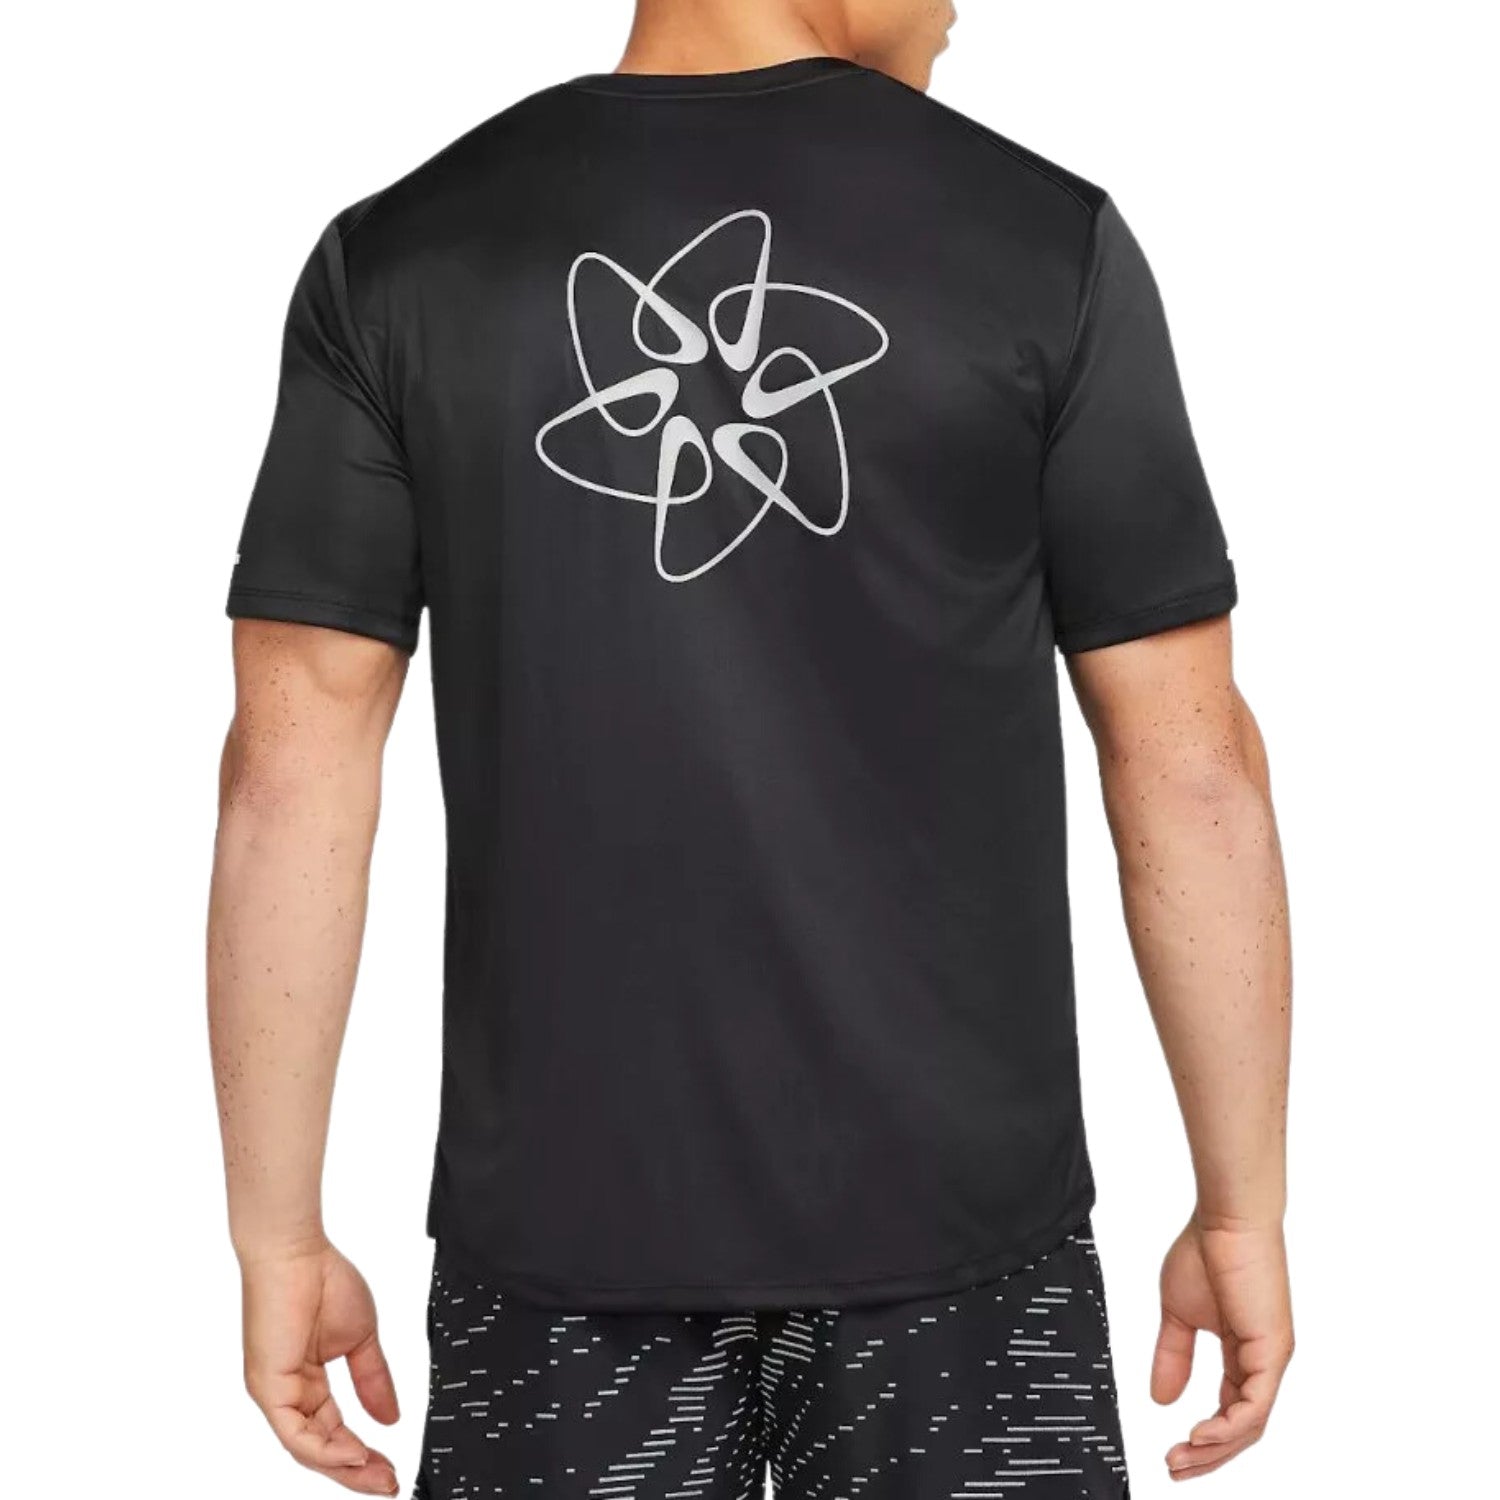 Nike Dri-fit Uv Run Division Miler Graphic Short Sleeves Tee Mens Style : Dm4711